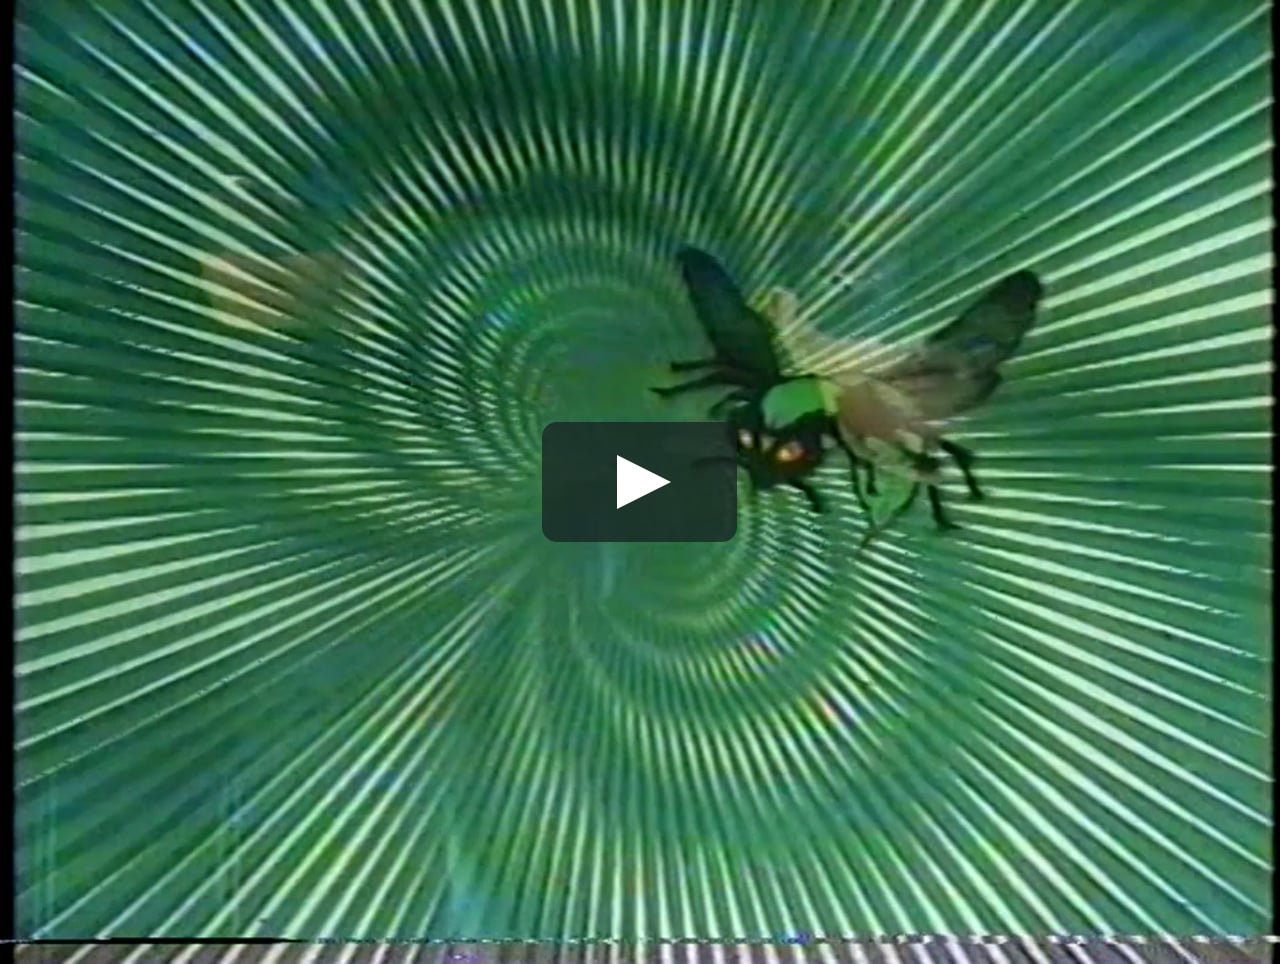 Bruce Lee in the Green Hornet episode 1 on Vimeo